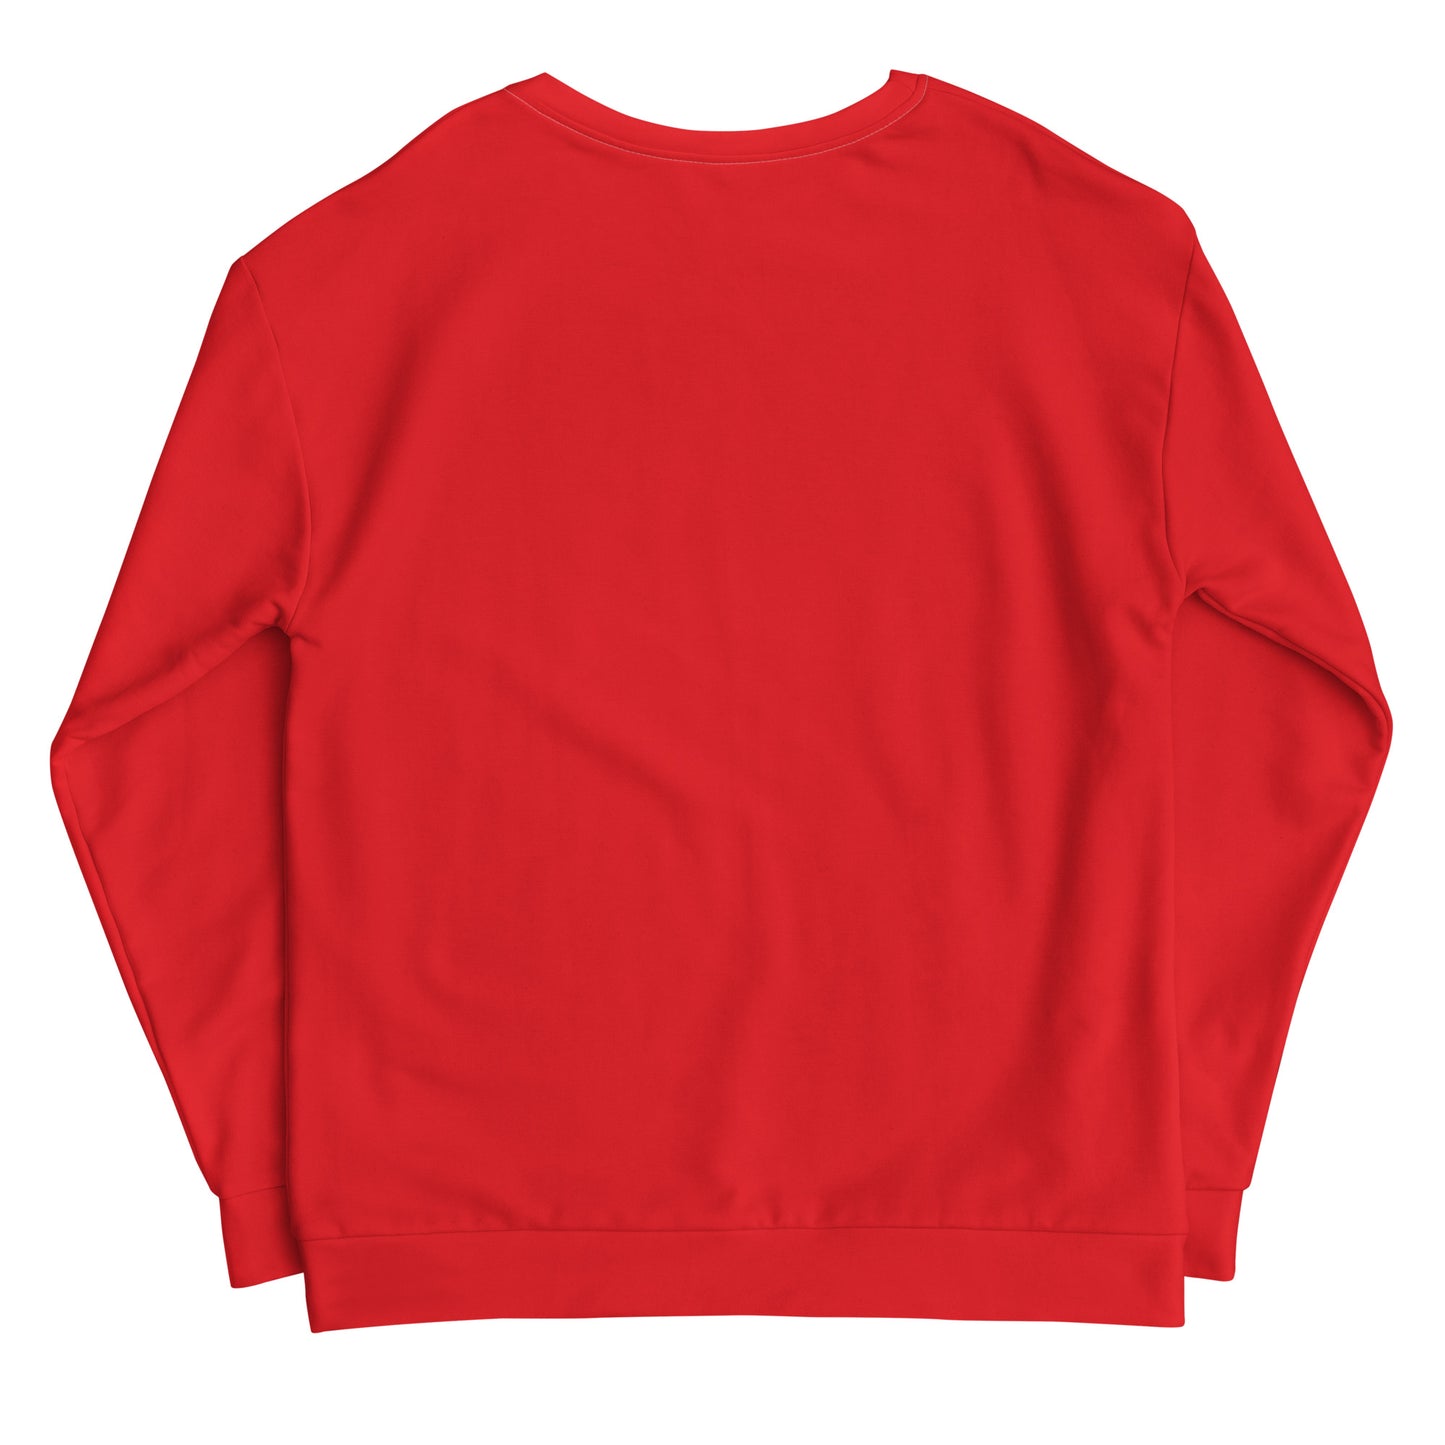 Canada Flag - Sustainably Made Sweatshirt